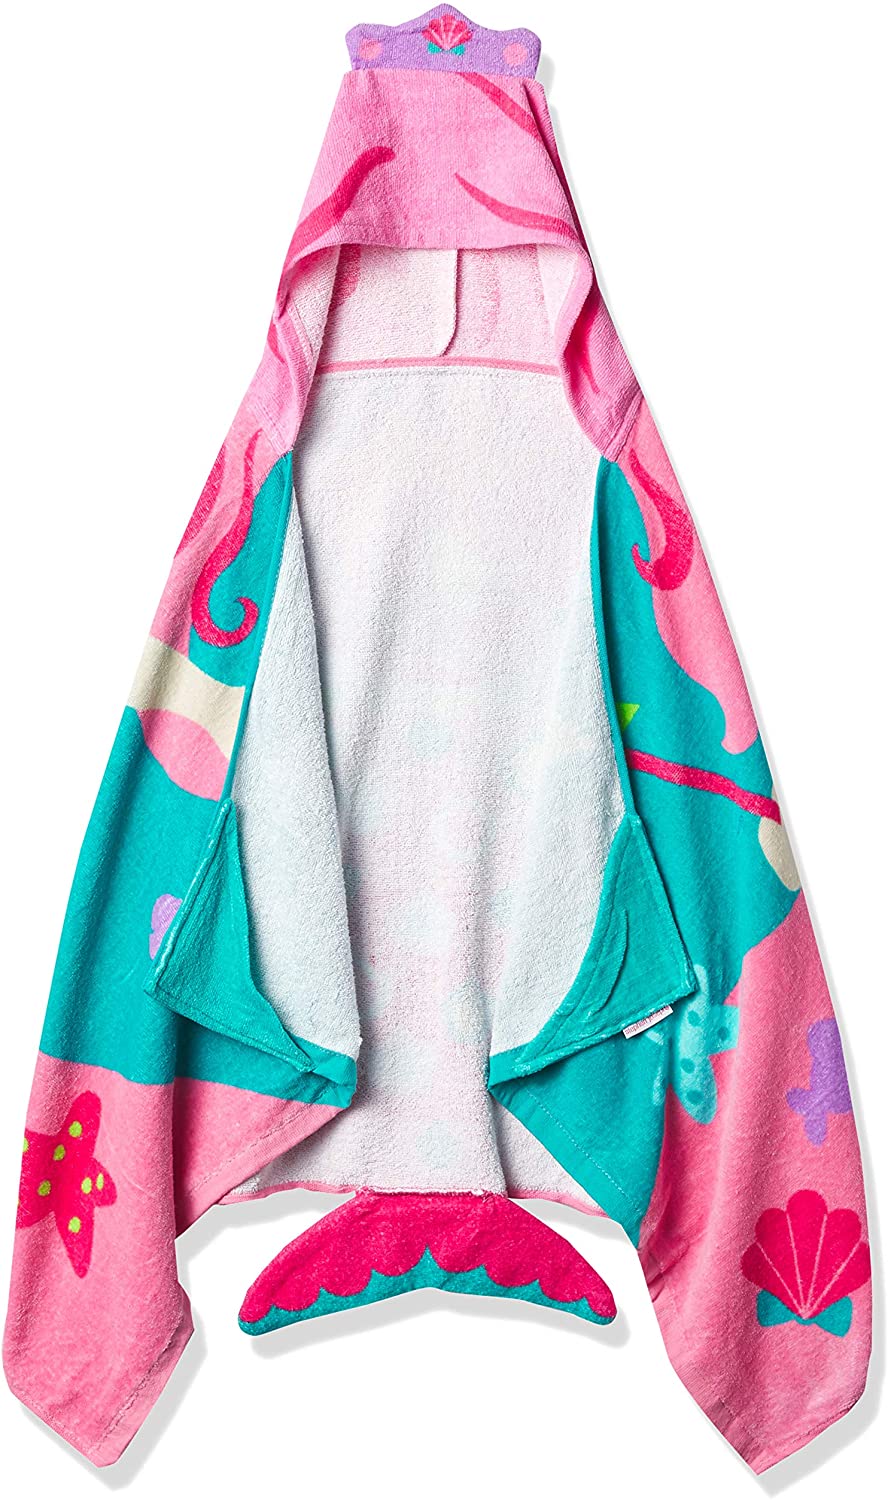 Stephen Joseph, Unisex Kids Bath and Beach Soft Cotton Velour Hooded Towel, Size 46”x24″